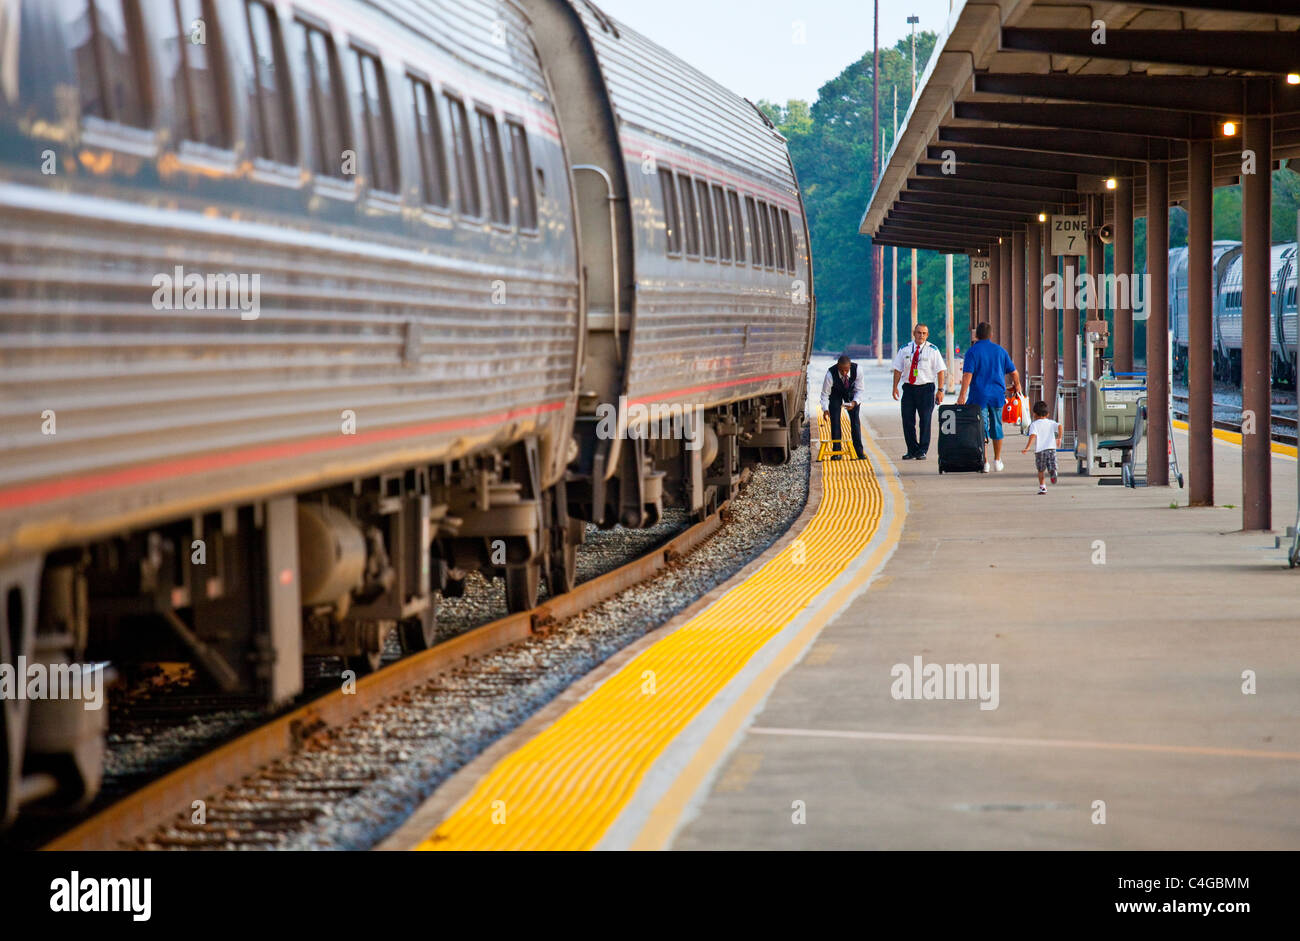 Amtrak Railway Station in Savannah, Georgia Stock Photo - Alamy